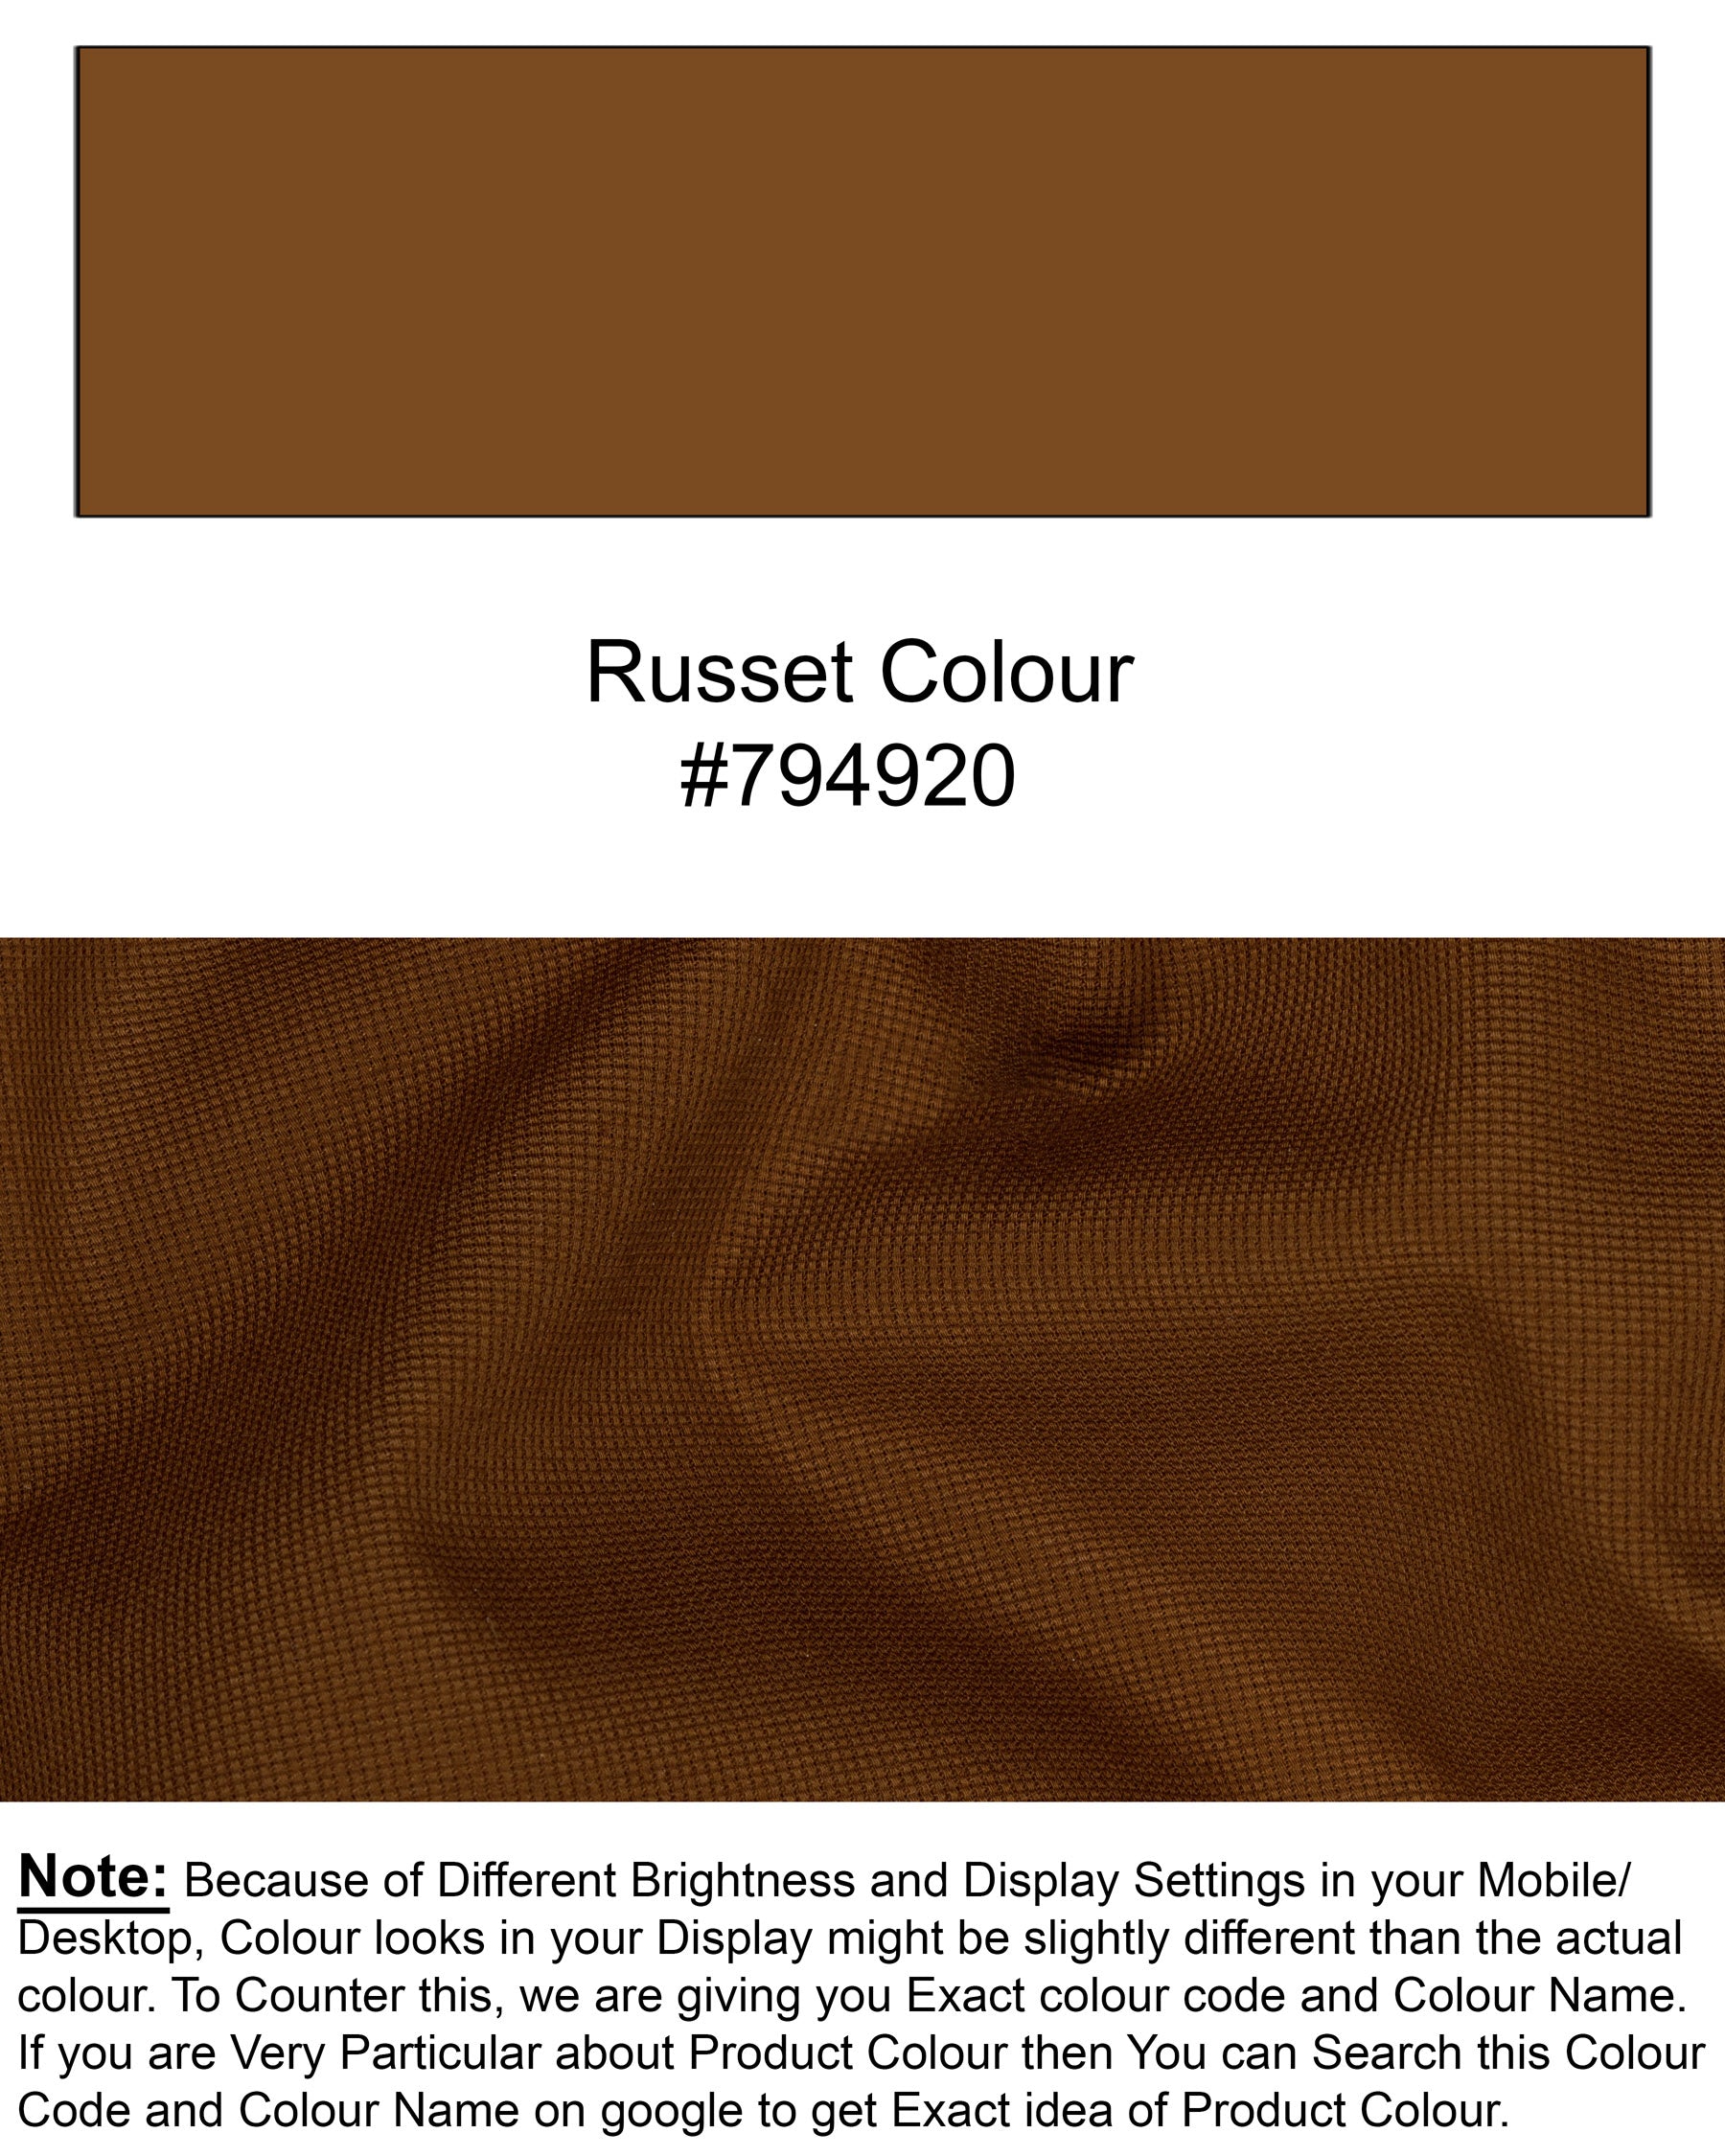 Russet Brown Premium Cotton Belt closure Sports Blazer BL1580-D9-36, BL1580-D9-38, BL1580-D9-40, BL1580-D9-42, BL1580-D9-44, BL1580-D9-46, BL1580-D9-48, BL1580-D9-50, BL1580-D9-52, BL1580-D9-54, BL1580-D9-56, BL1580-D9-58, BL1580-D9-60